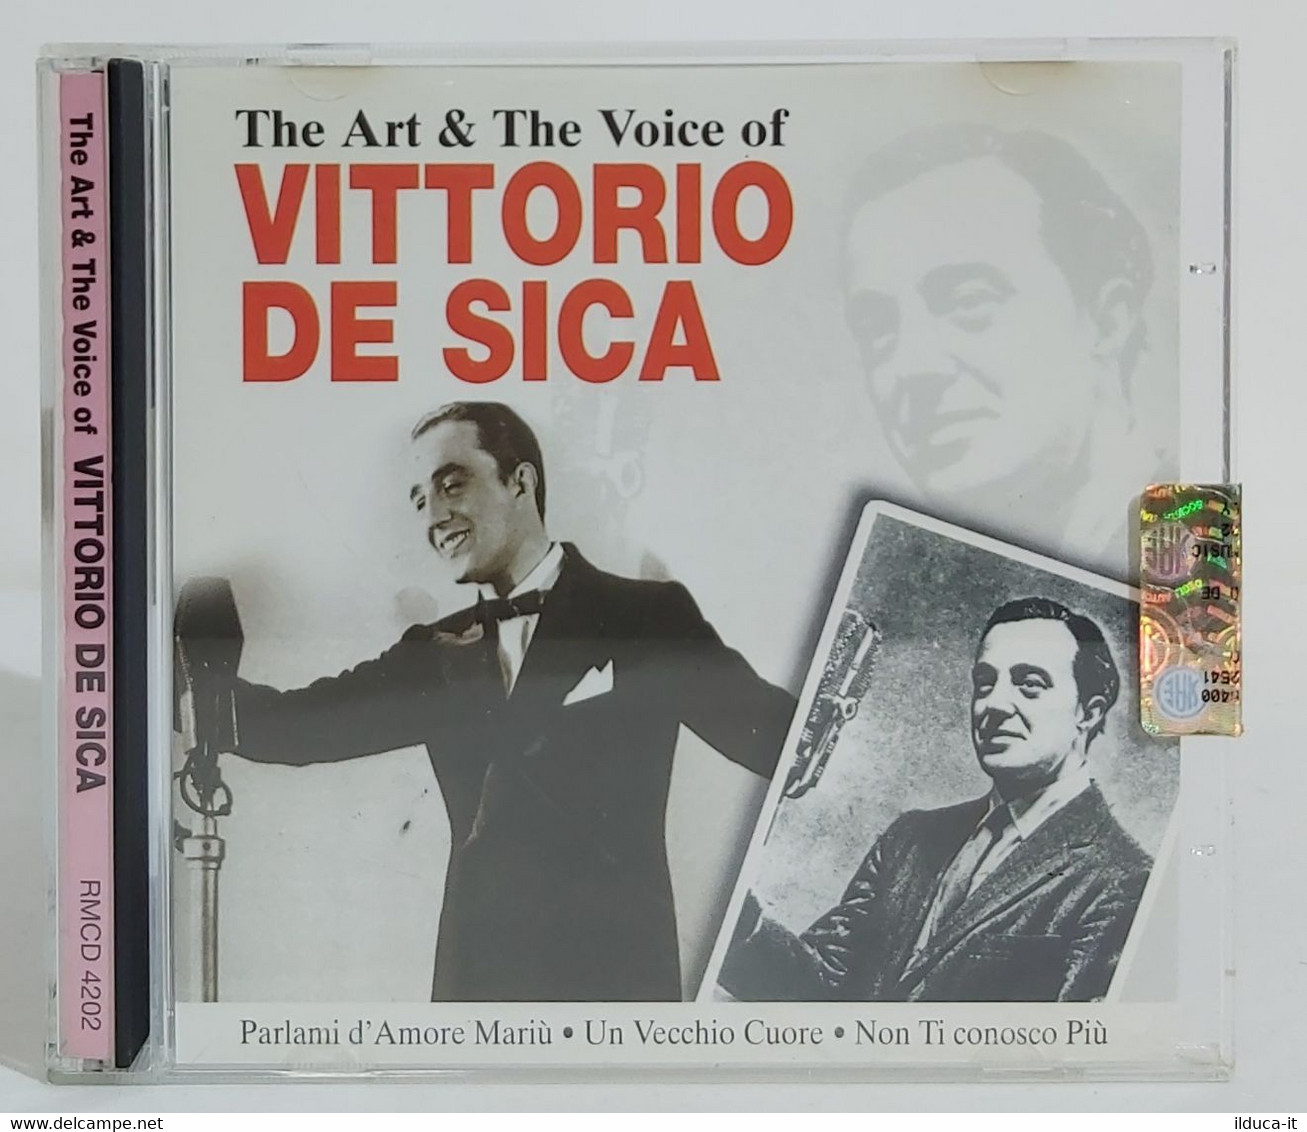 I102304 CD - The Art & The Voice Of Vittorio De Sica - Replay Music - Sonstige - Italienische Musik